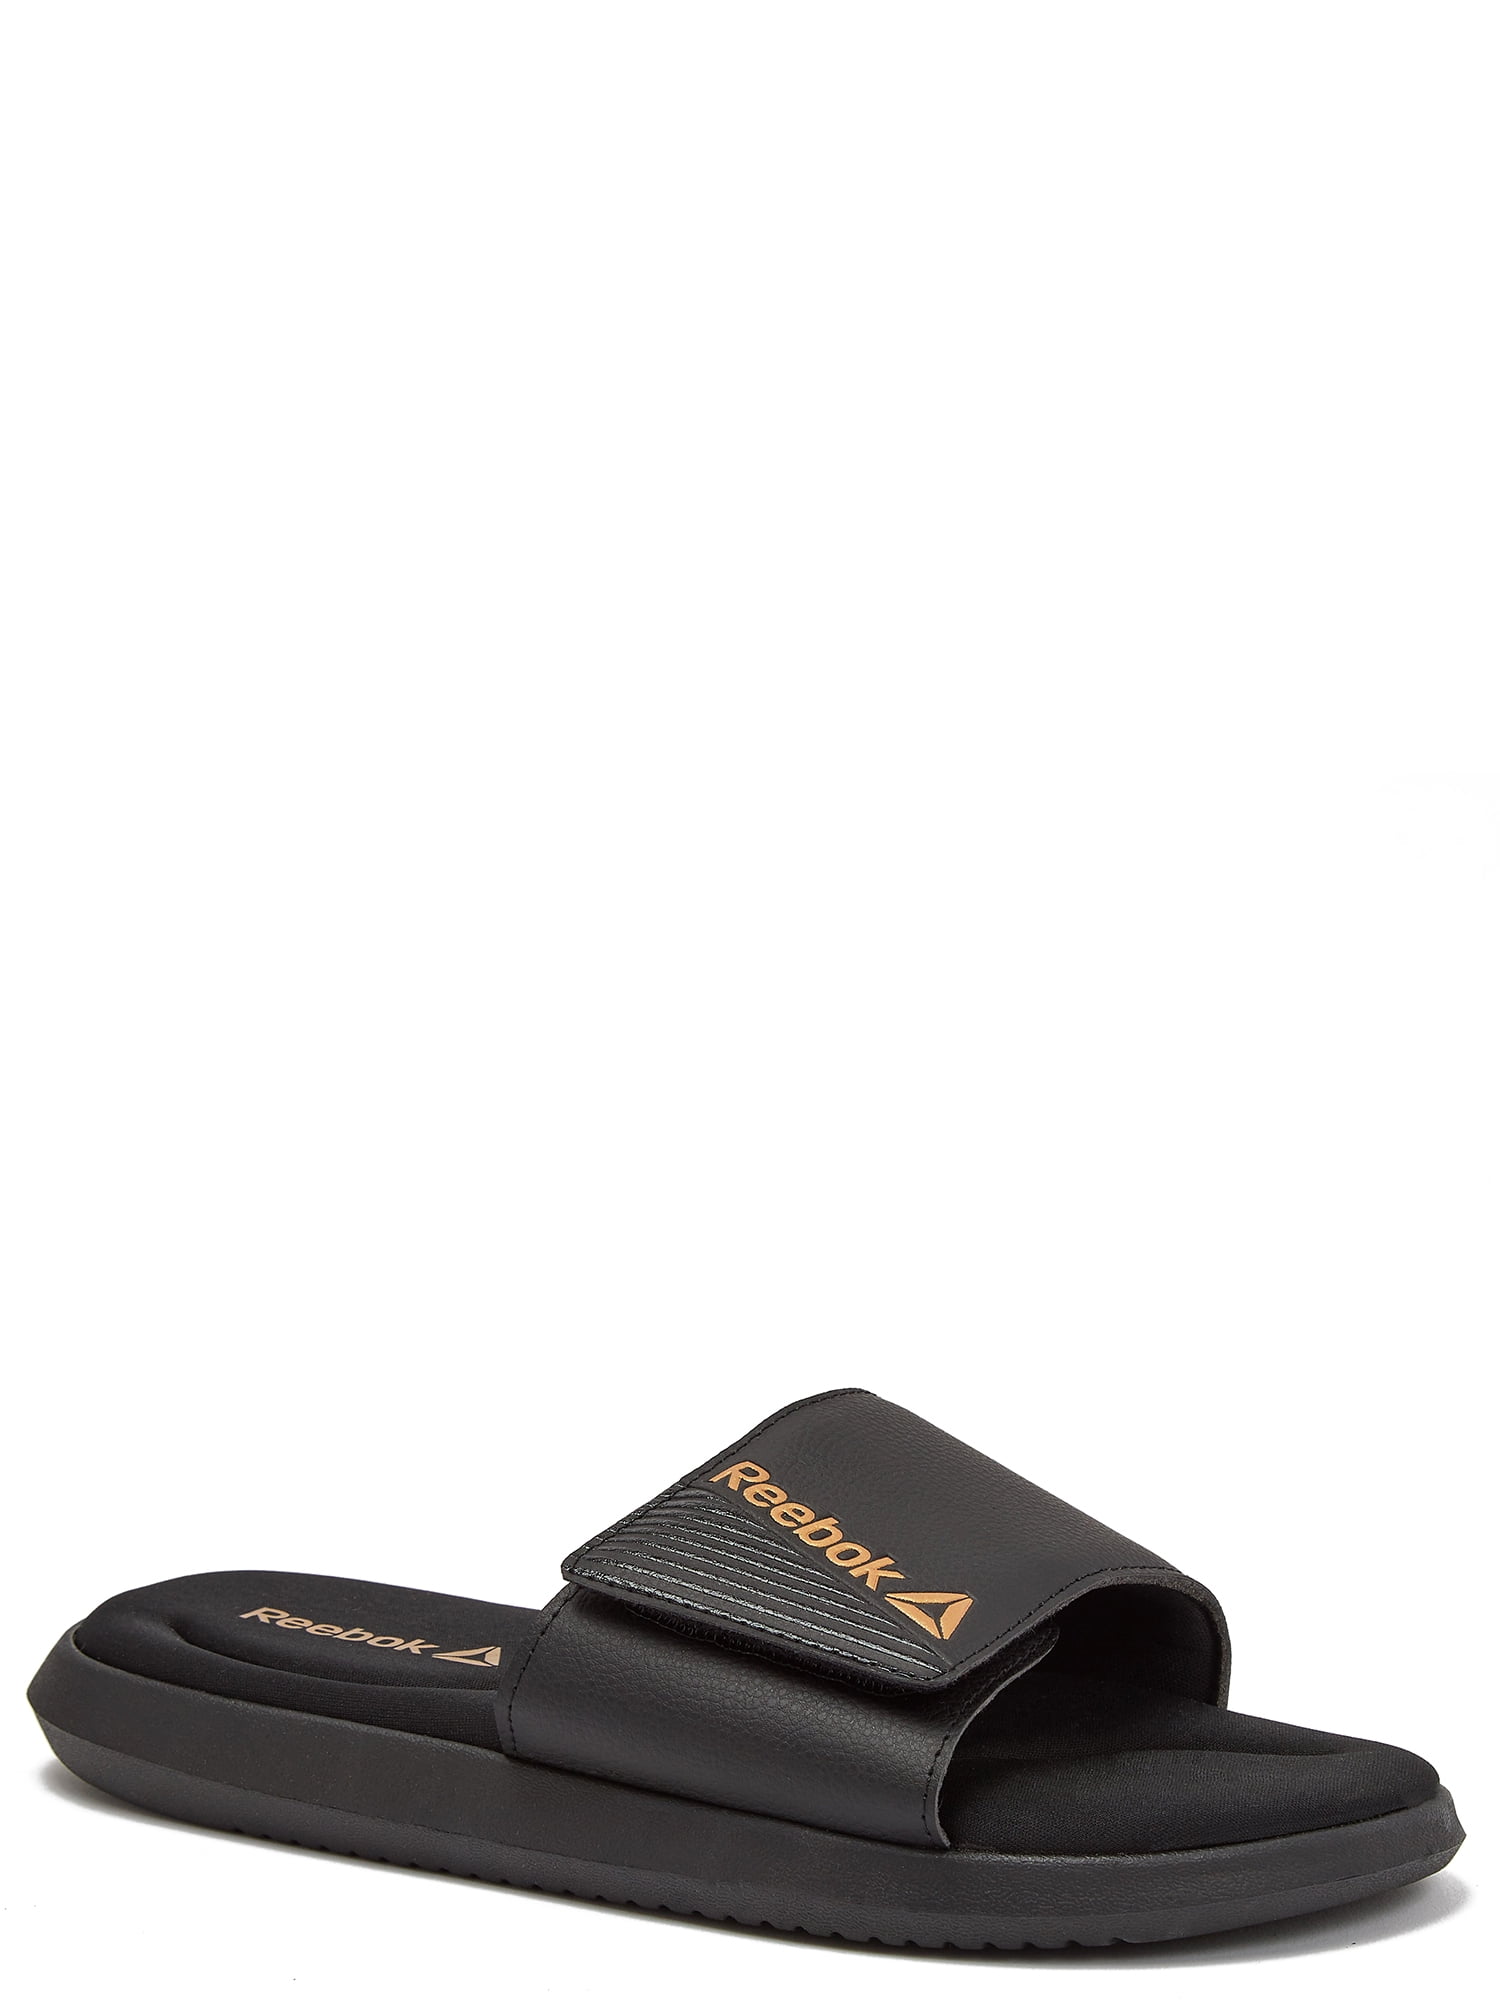 STQ Memory Foam Slides for Women Comfort Adjustable Recovery Sandals